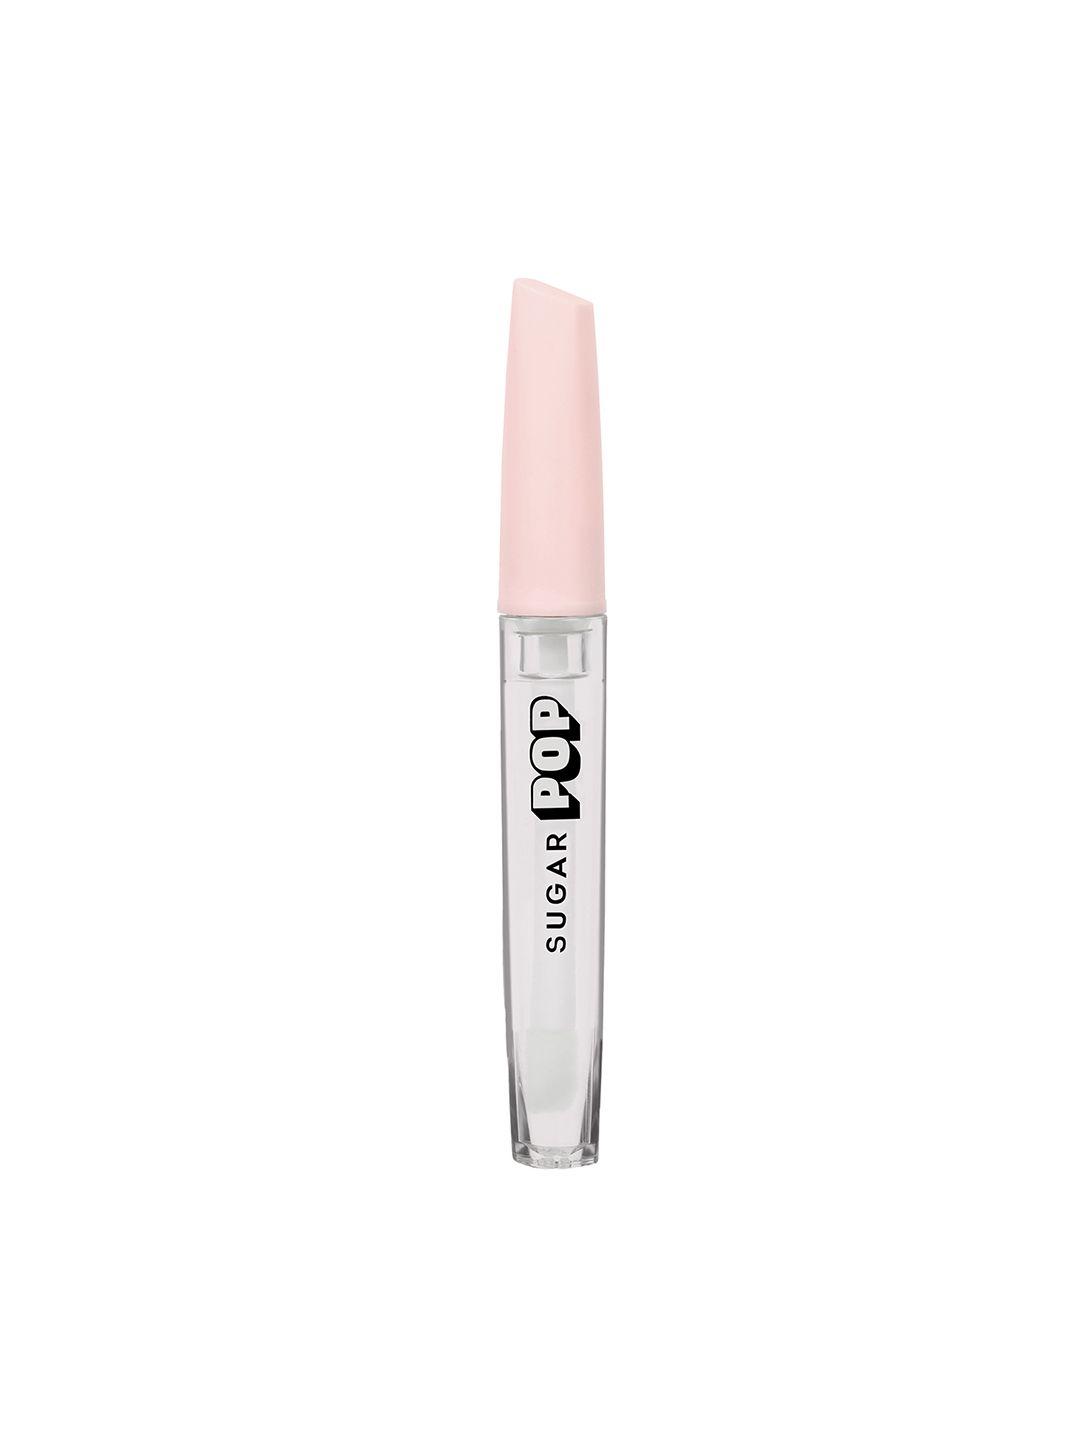 sugar pop high shine lip gloss enriched with vitamin e 3.5 ml - marshmallow 01